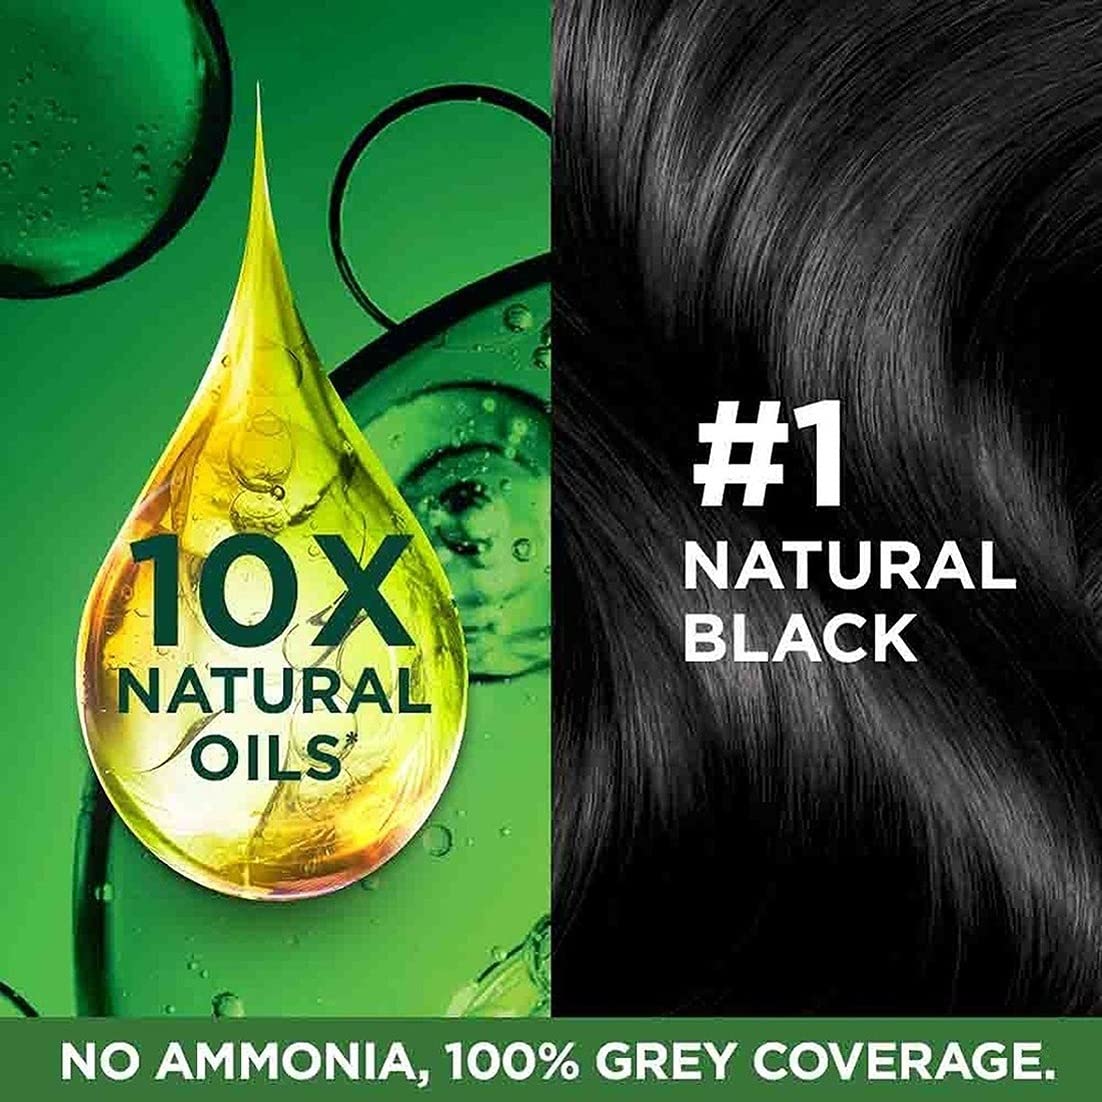 Garnier Color Naturals Nourishing Permanent Hair Color Cream - Natural Black 1 Set